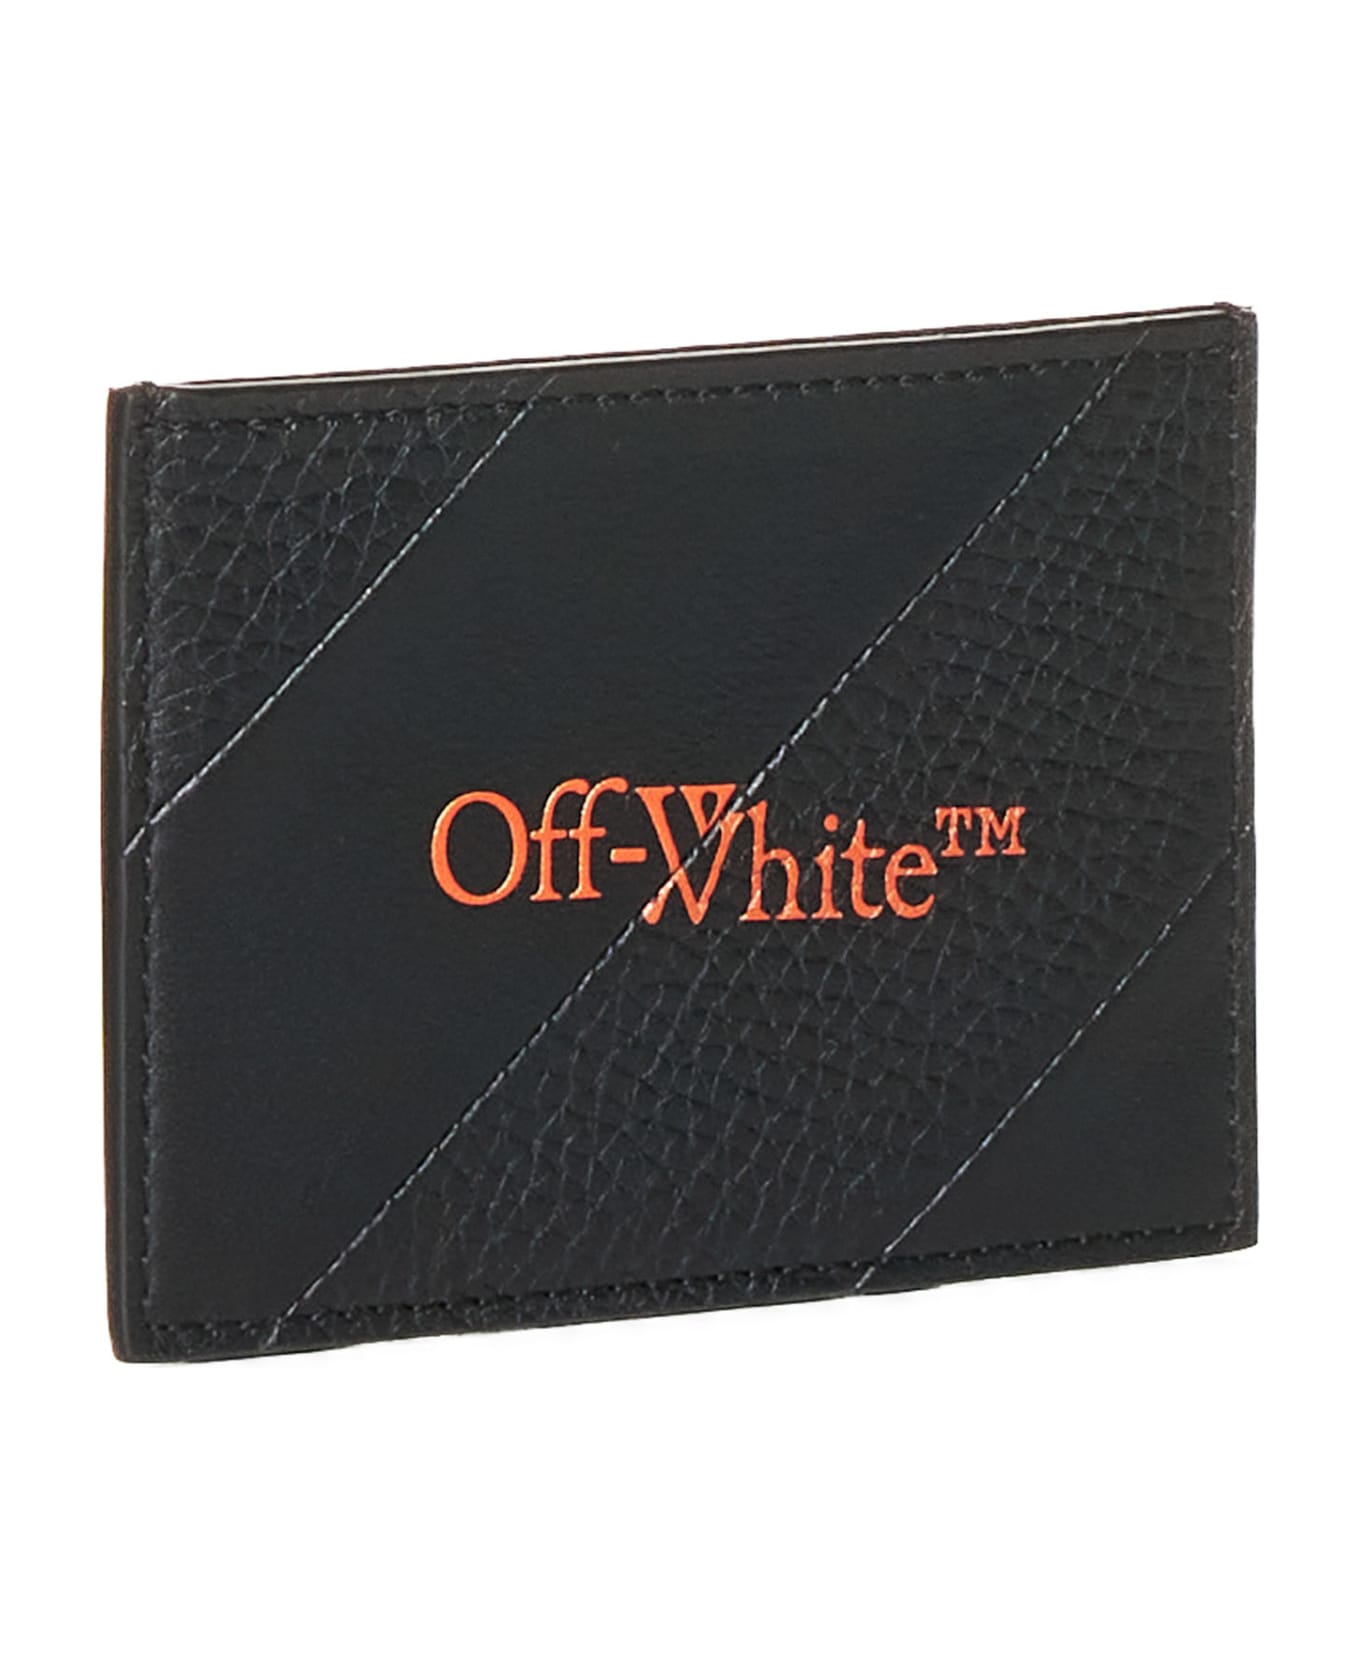 Off-White Wallet - Black orange